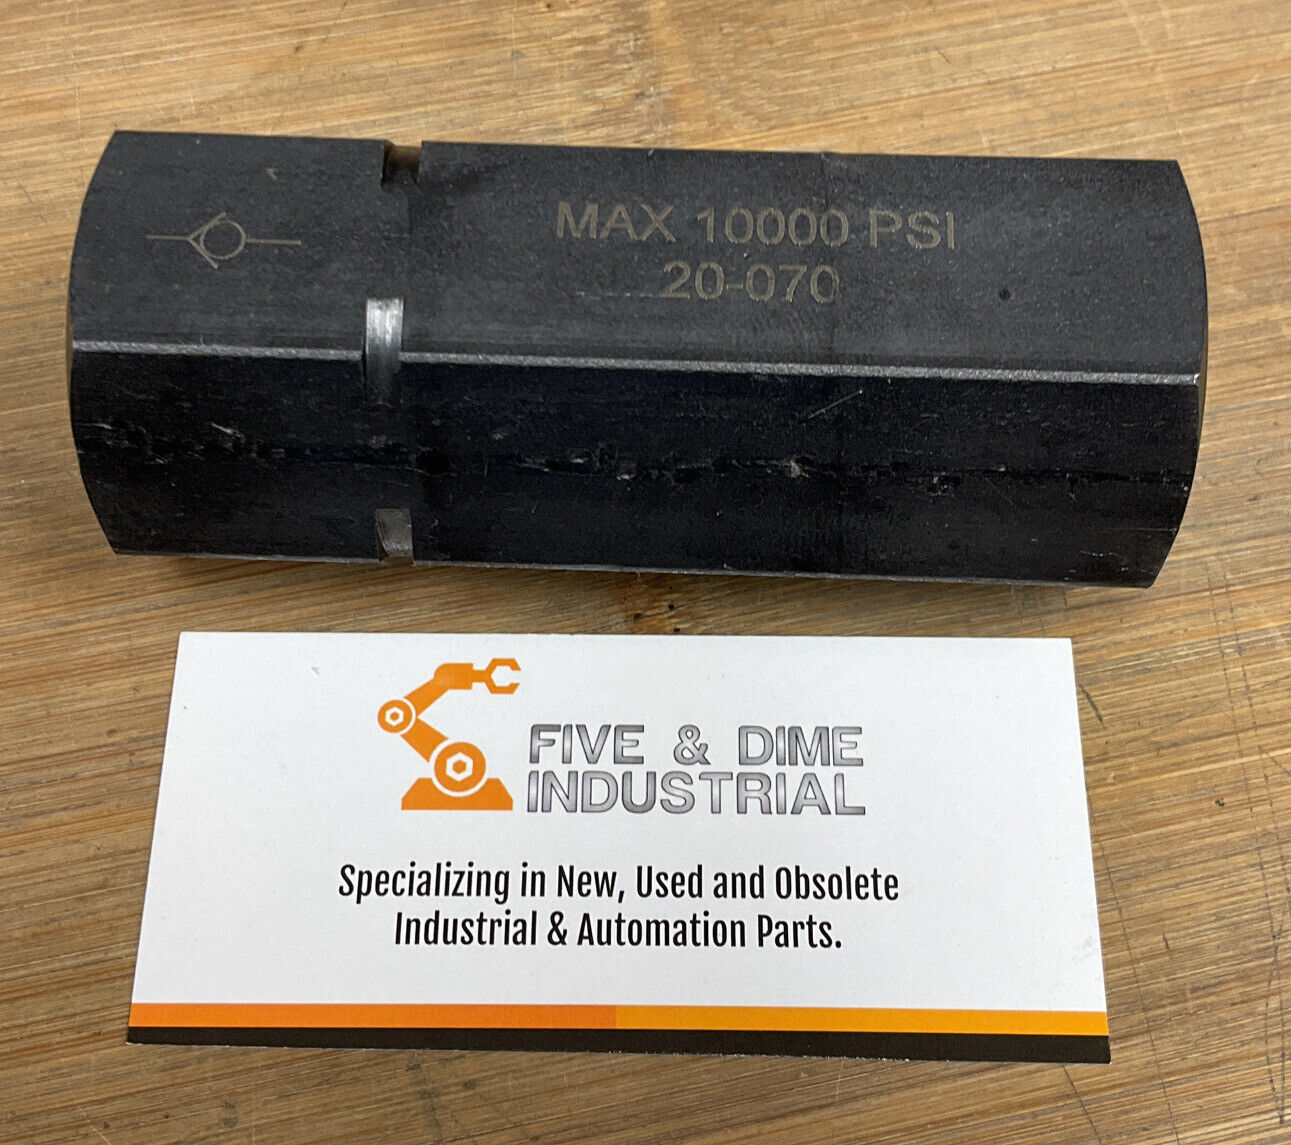 DMIC CVH050750S CHECK VALVE 10000 PSI MAX (BL112)